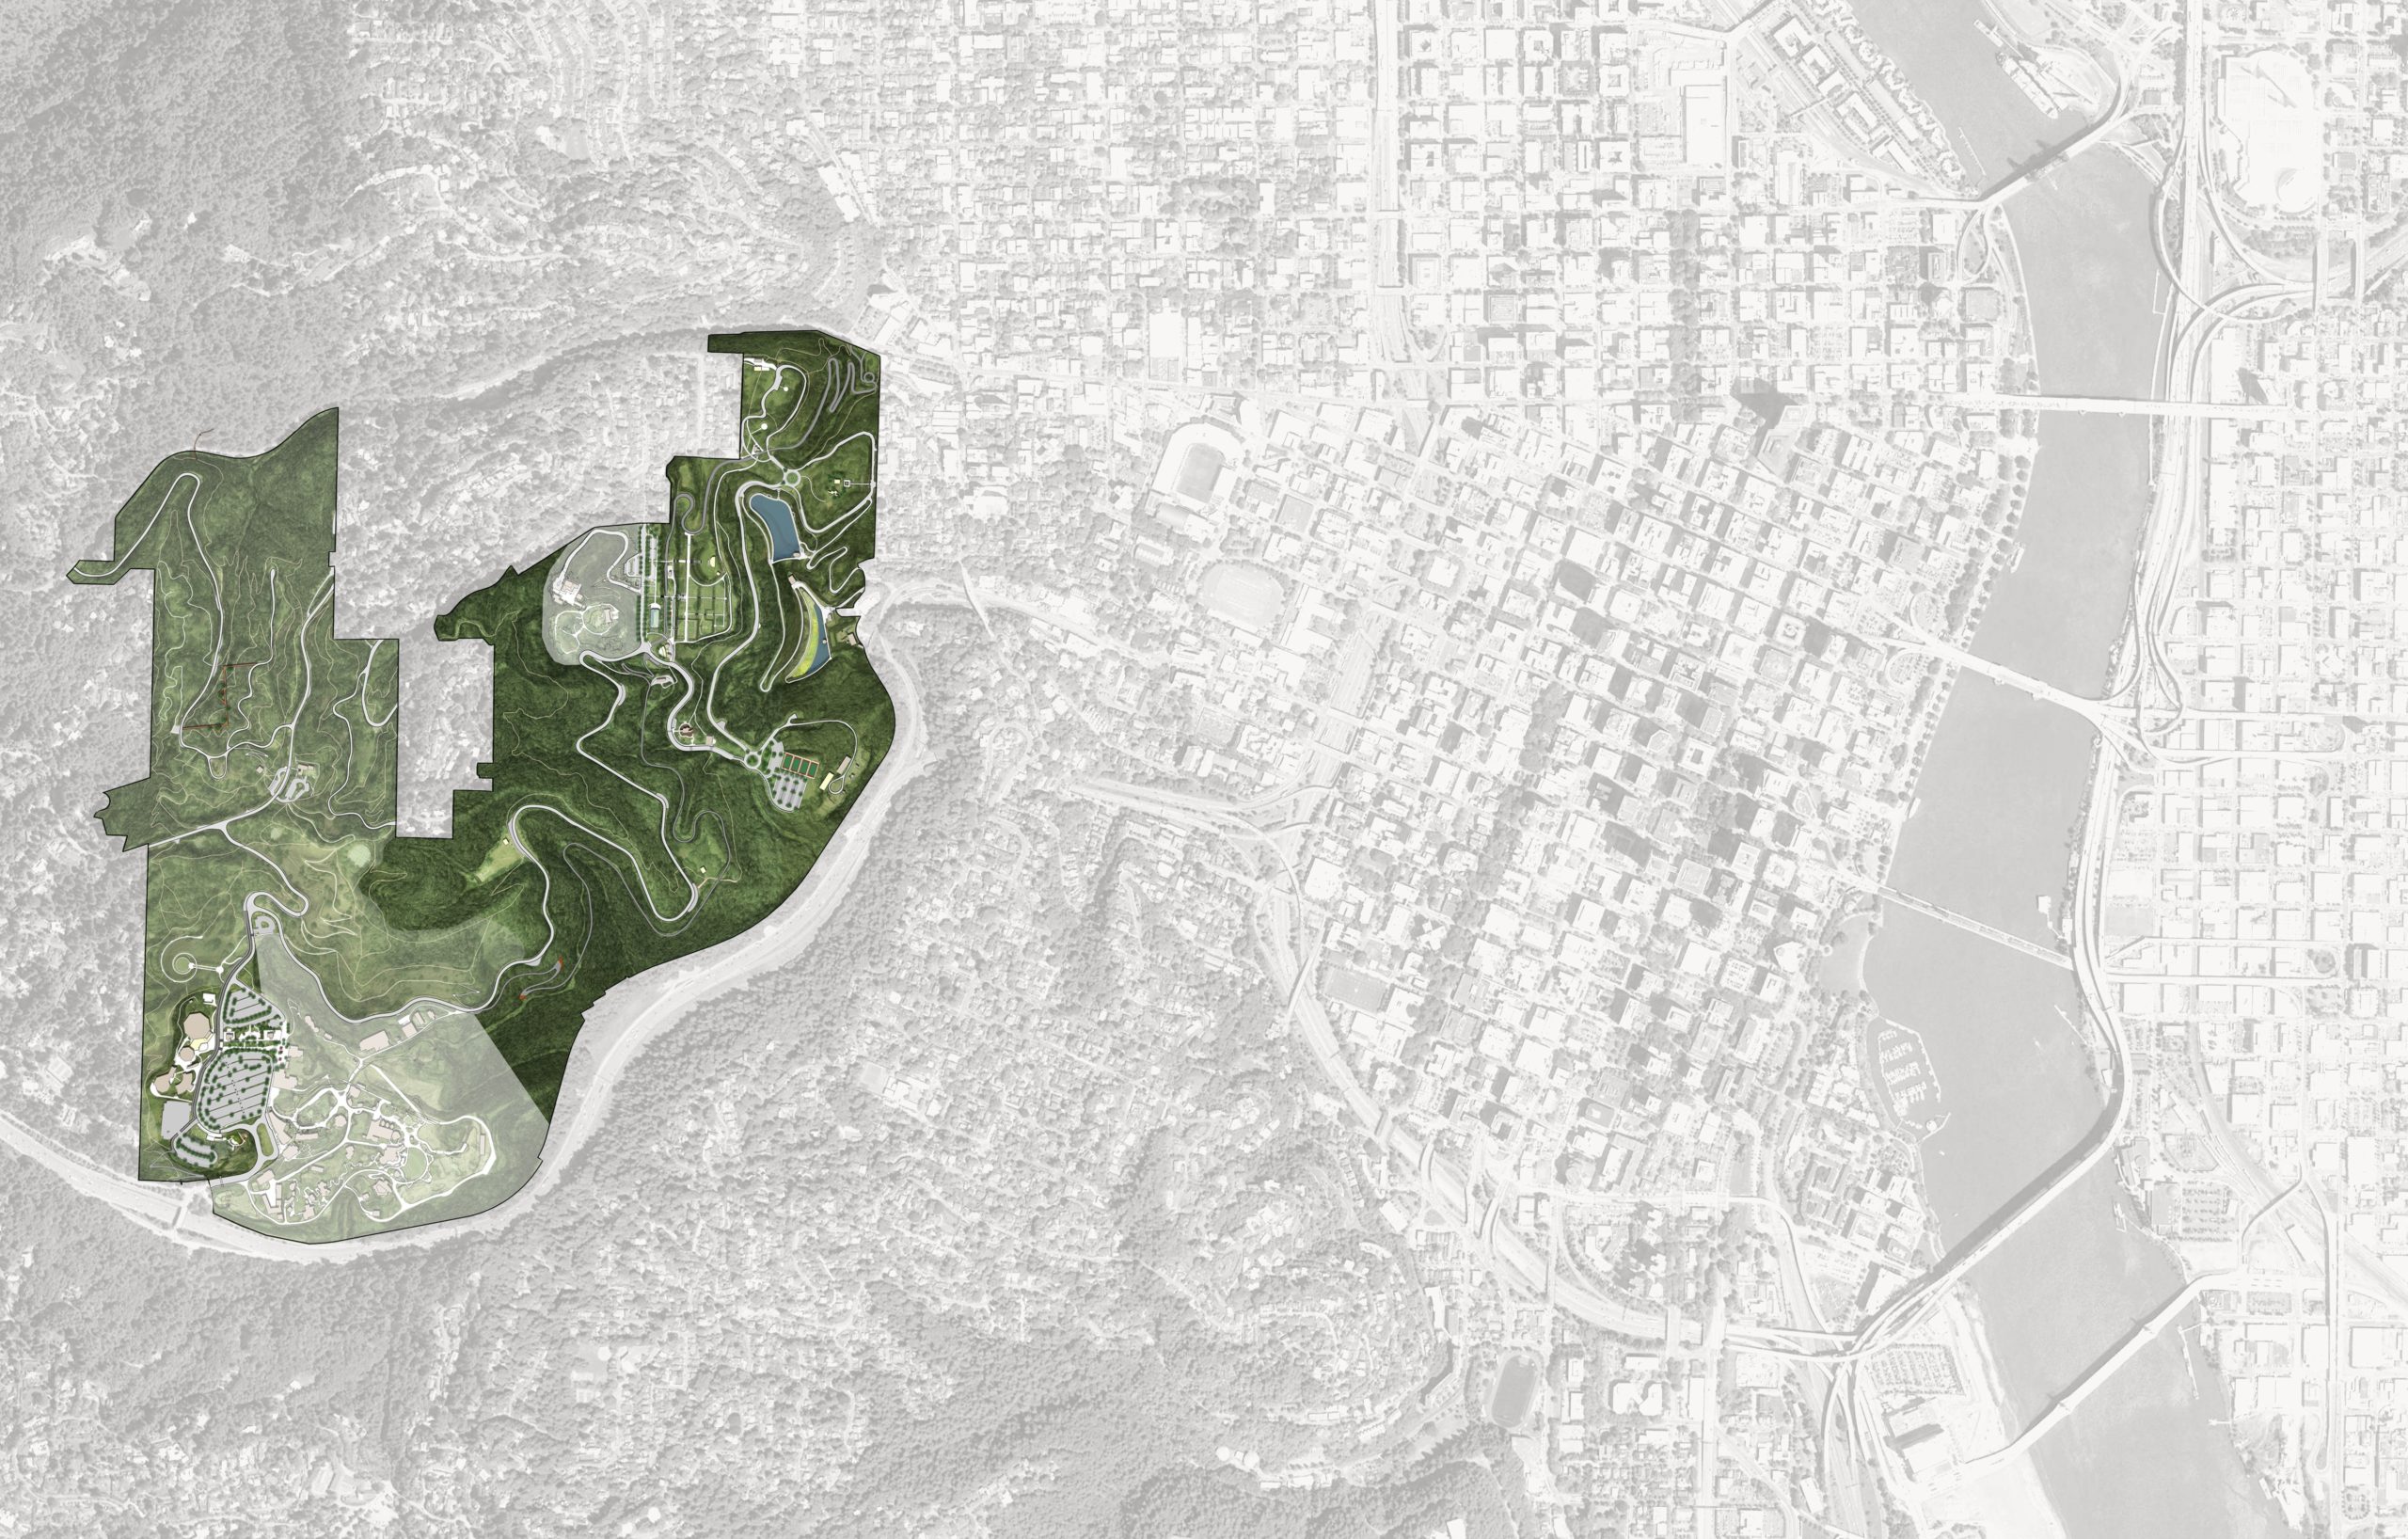 Washington Park Master Plan | Image 2/15